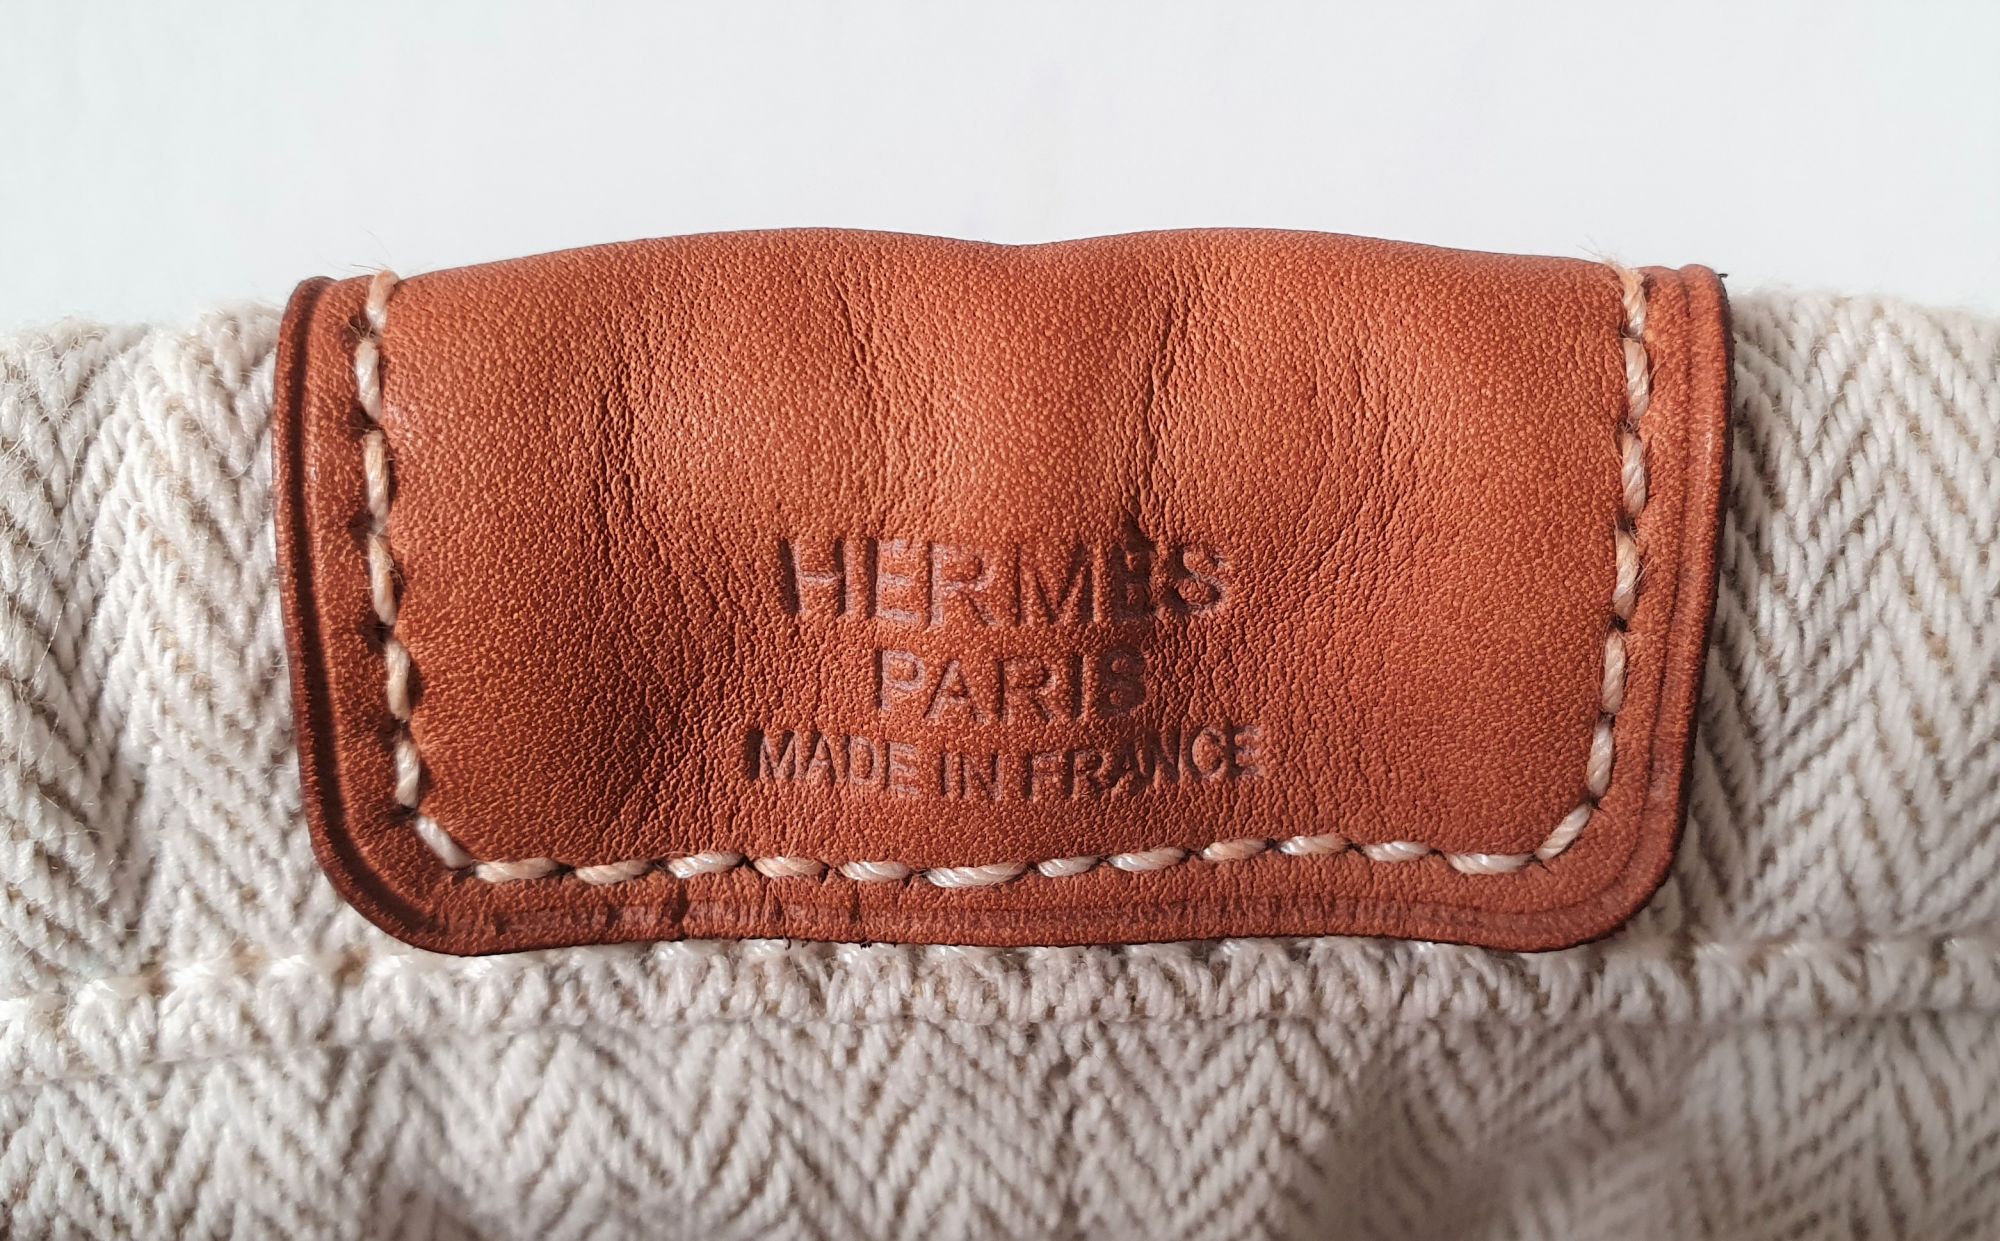 Hermès POCHETTE POUR SAC A MAIN HERMES FOURBI 25 TROUSSE EN TOILE